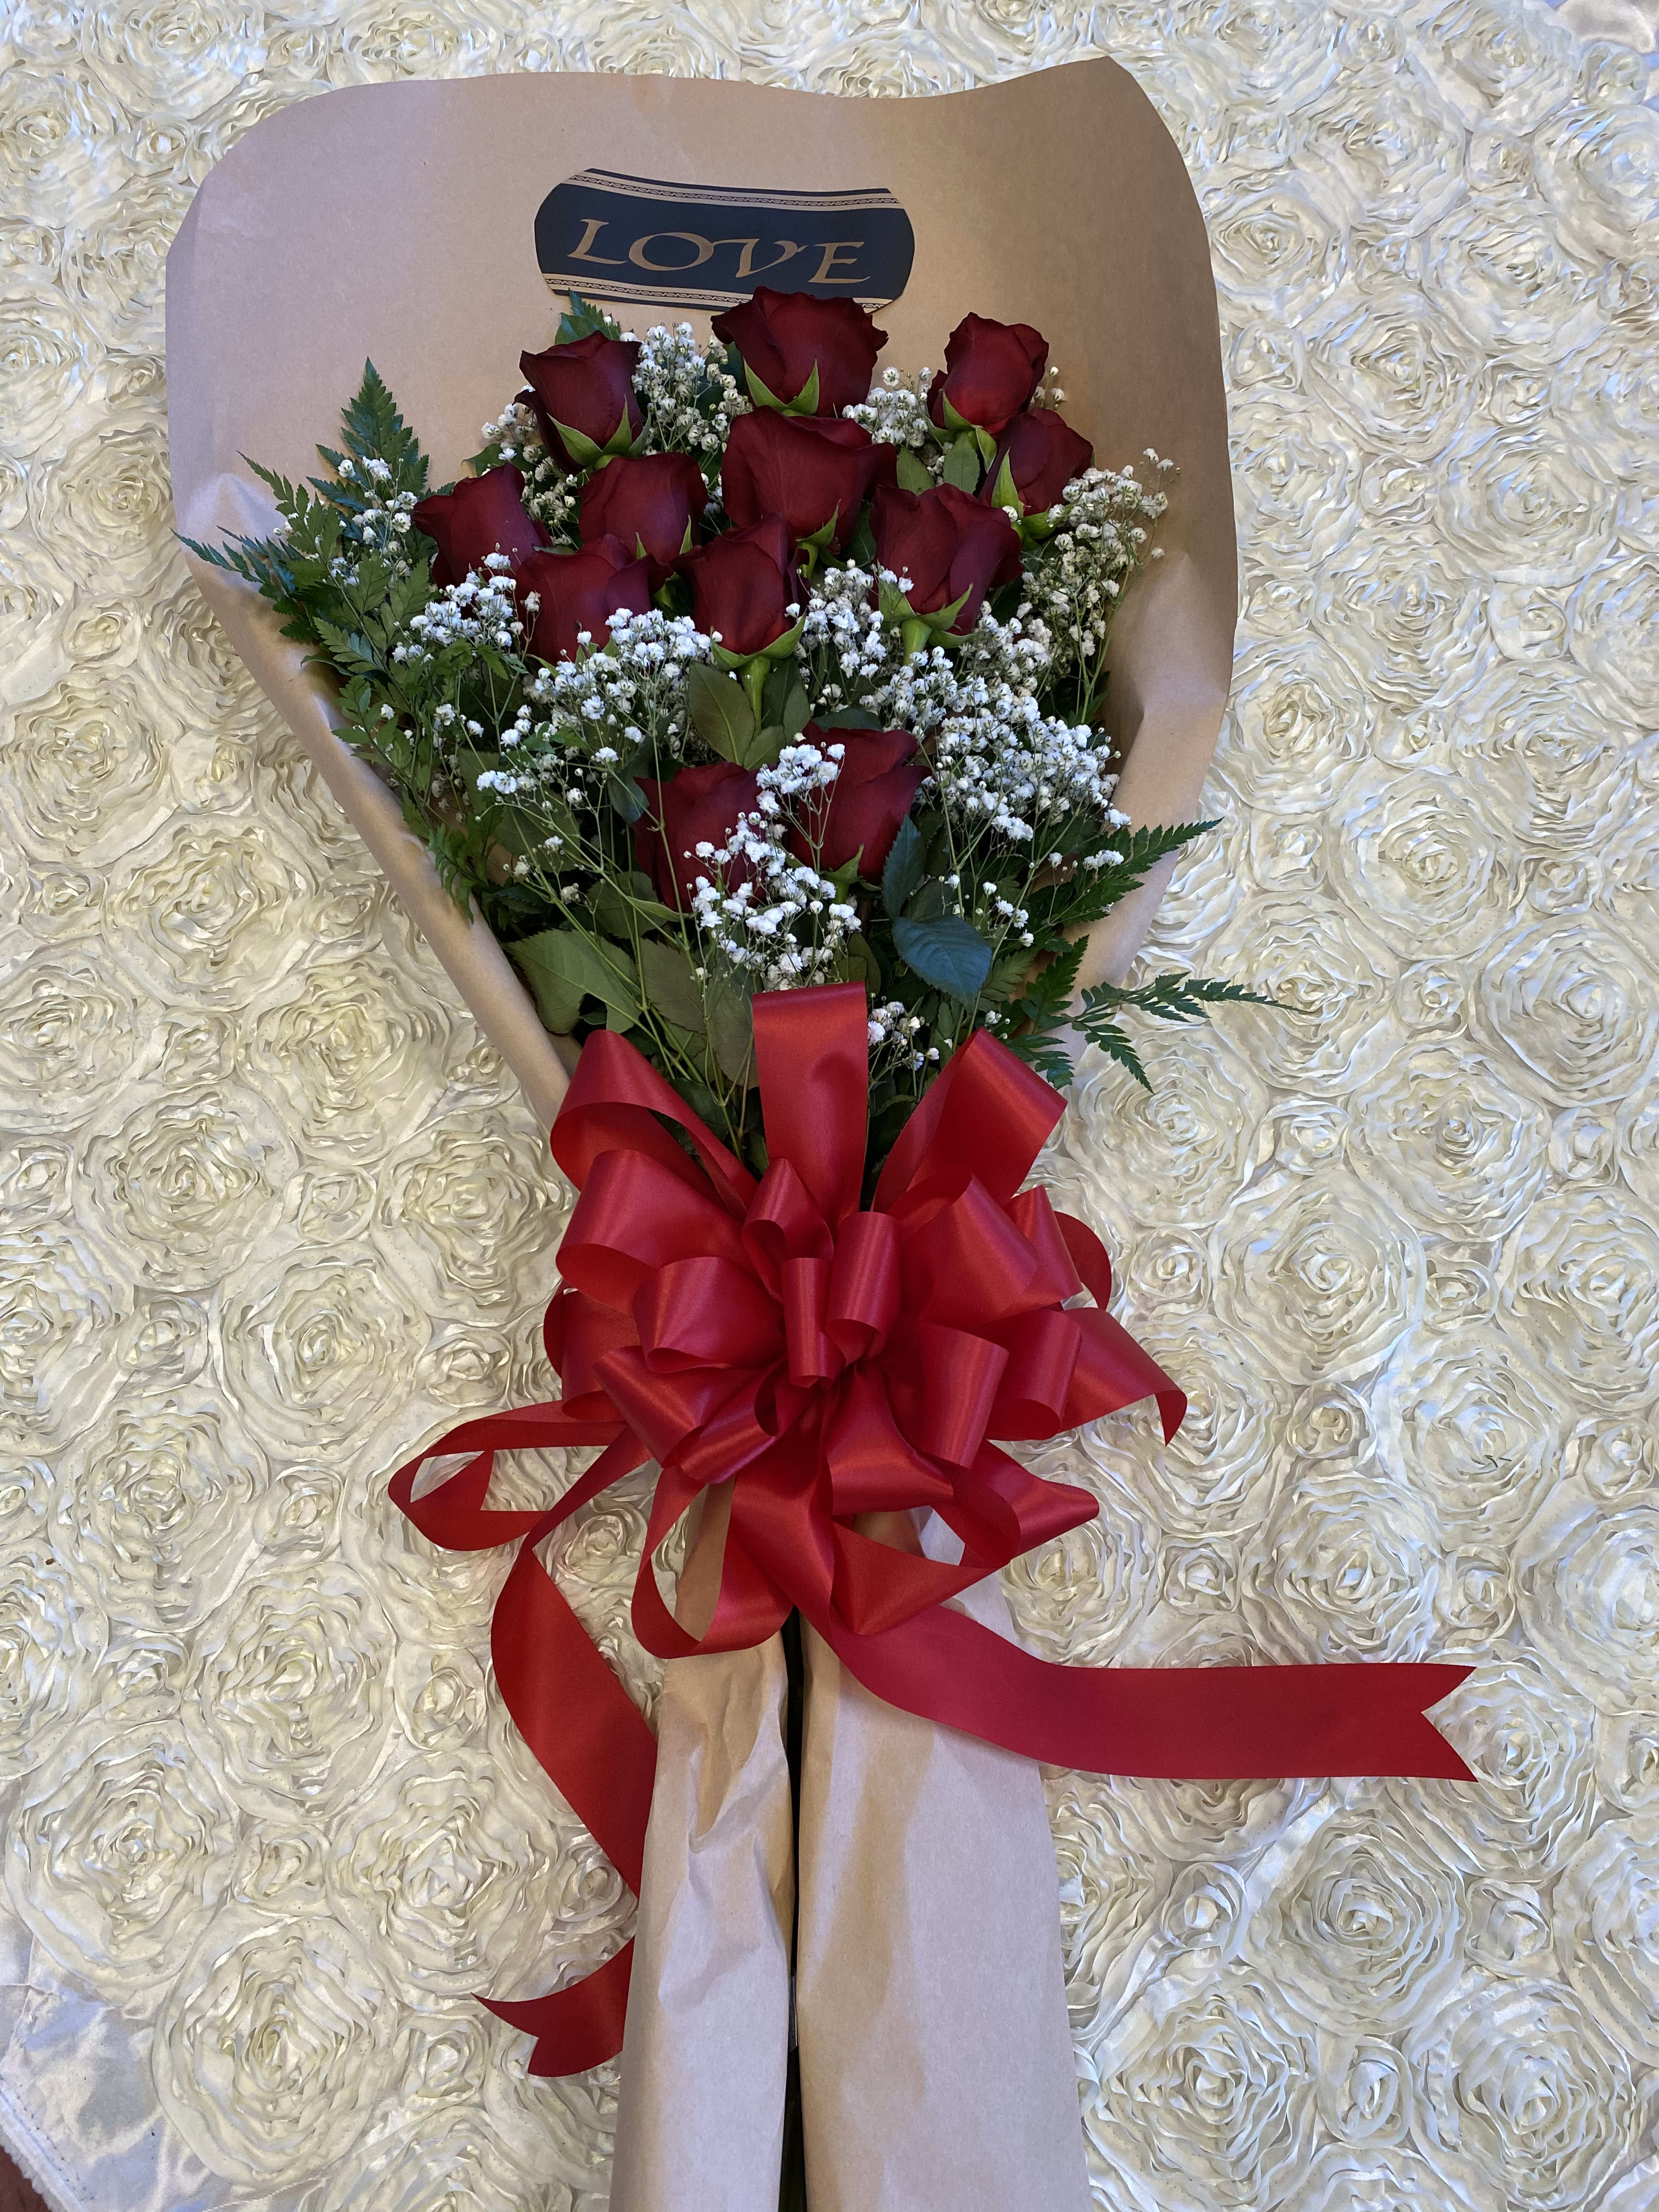 Wrapped Bouquet - Roses Premium Wrap